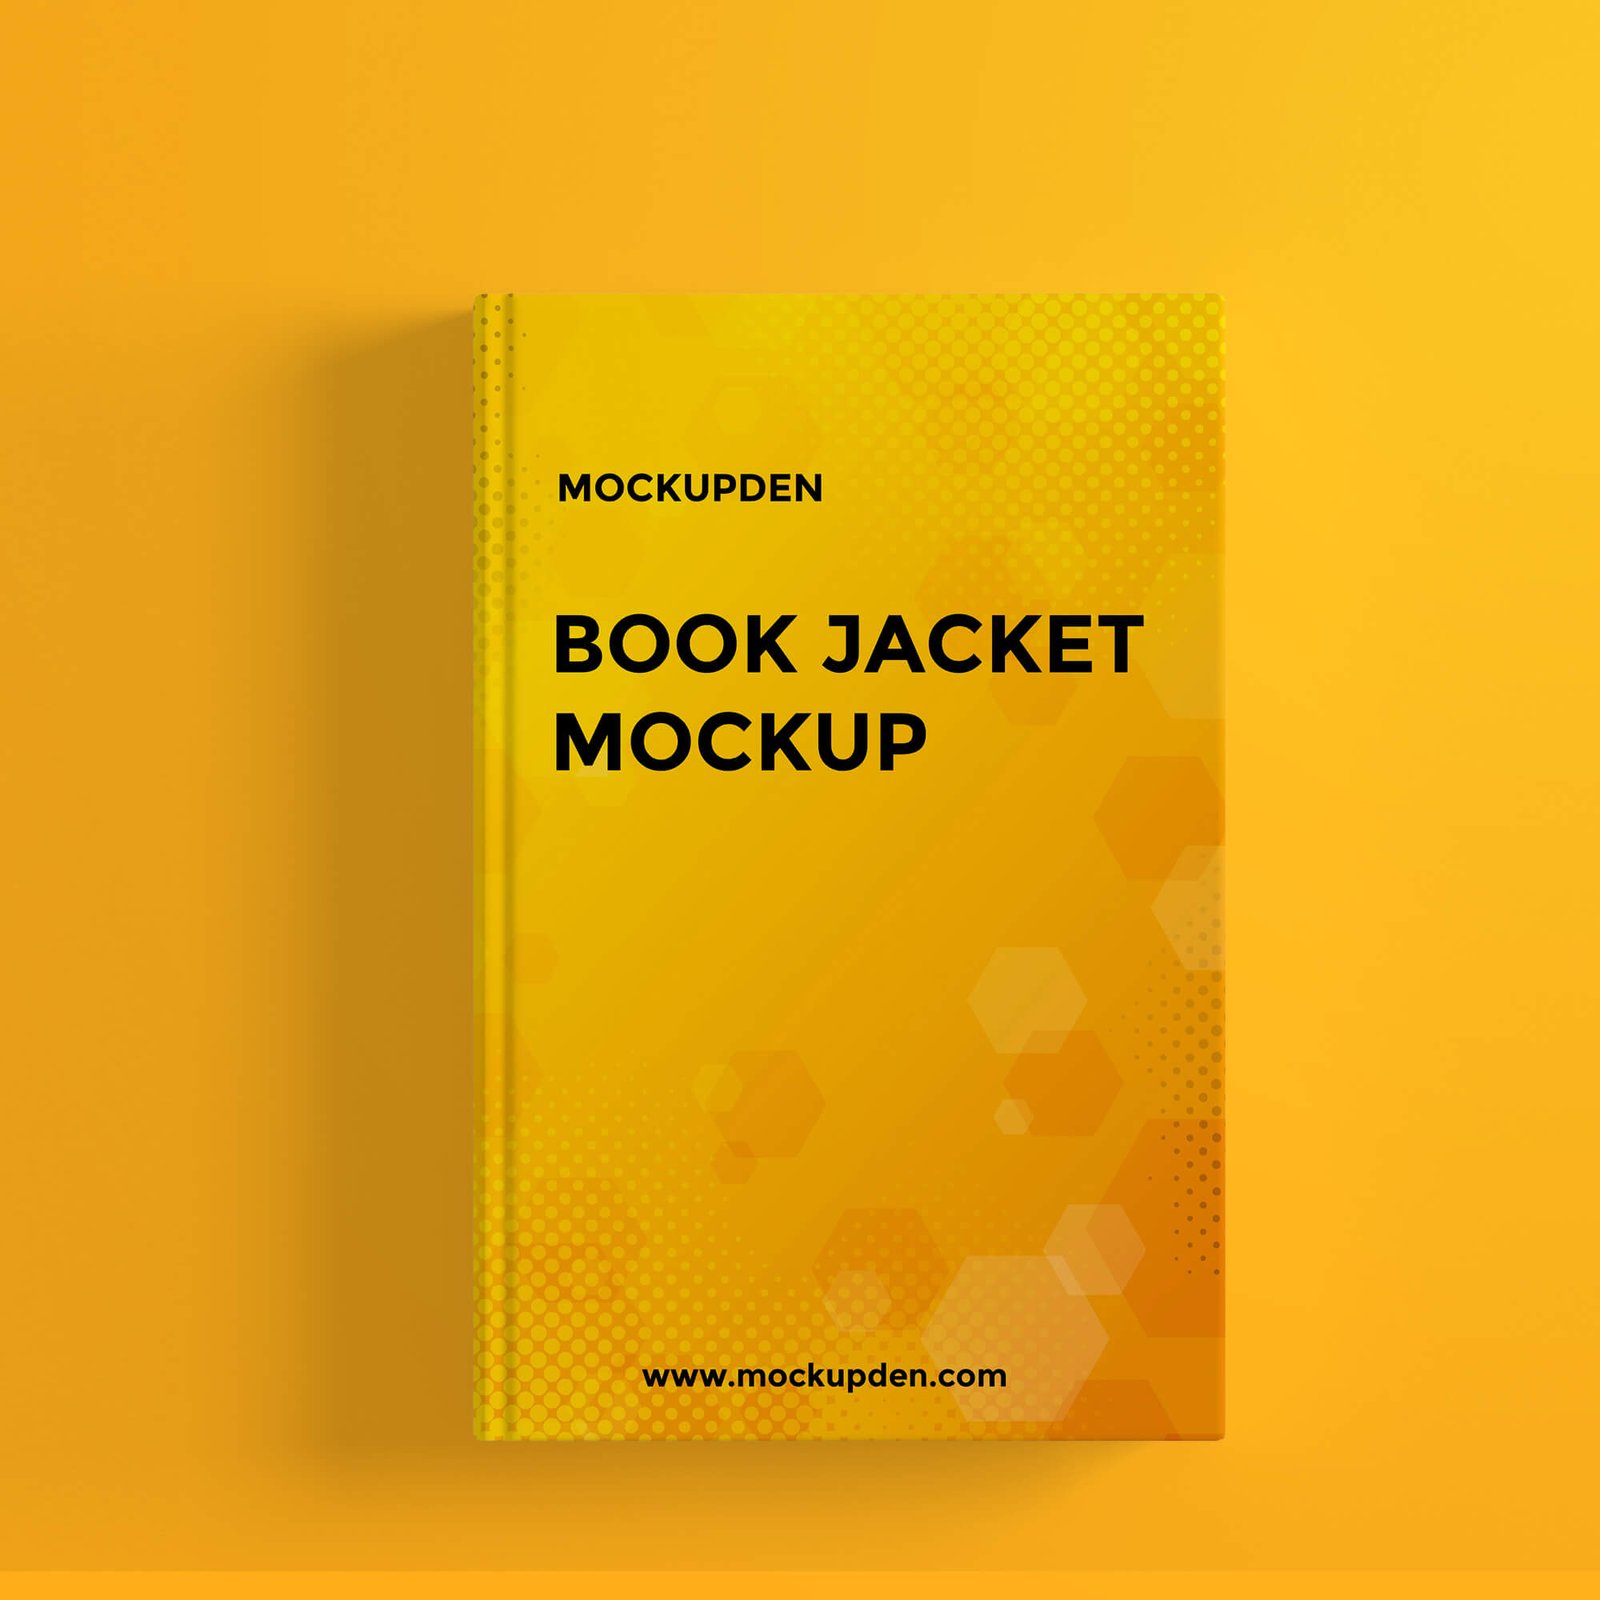 Design Free Book Jacket Mockup PSD Template